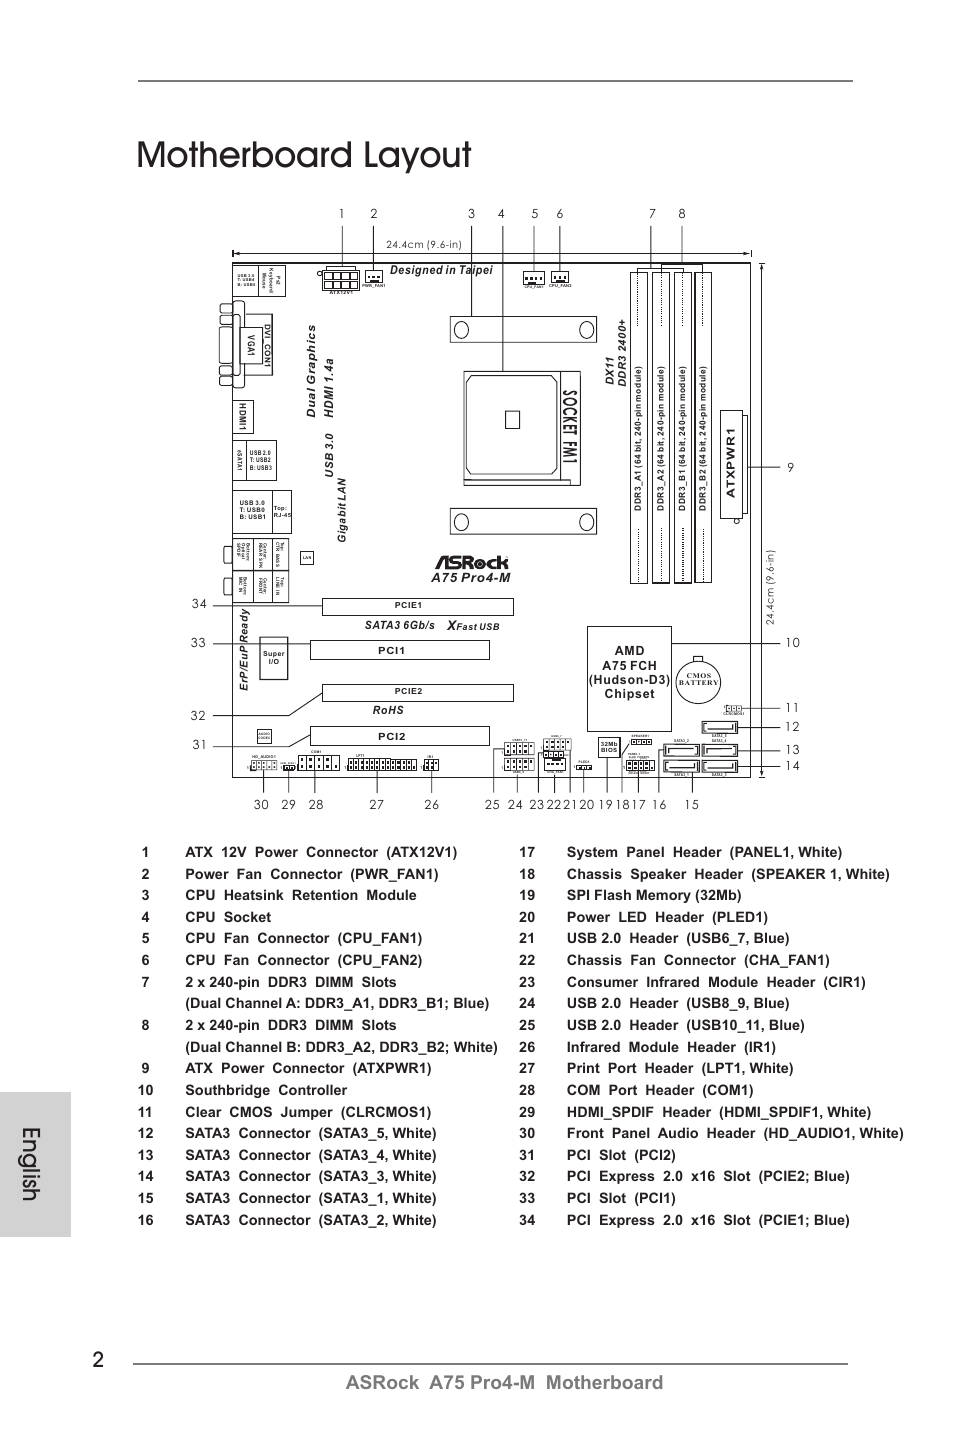 Motherboard layout, English, Asrock a75 pro4-m motherboard | ASRock A75 Pro4-M  User Manual | Page 2 / 260 | Original mode